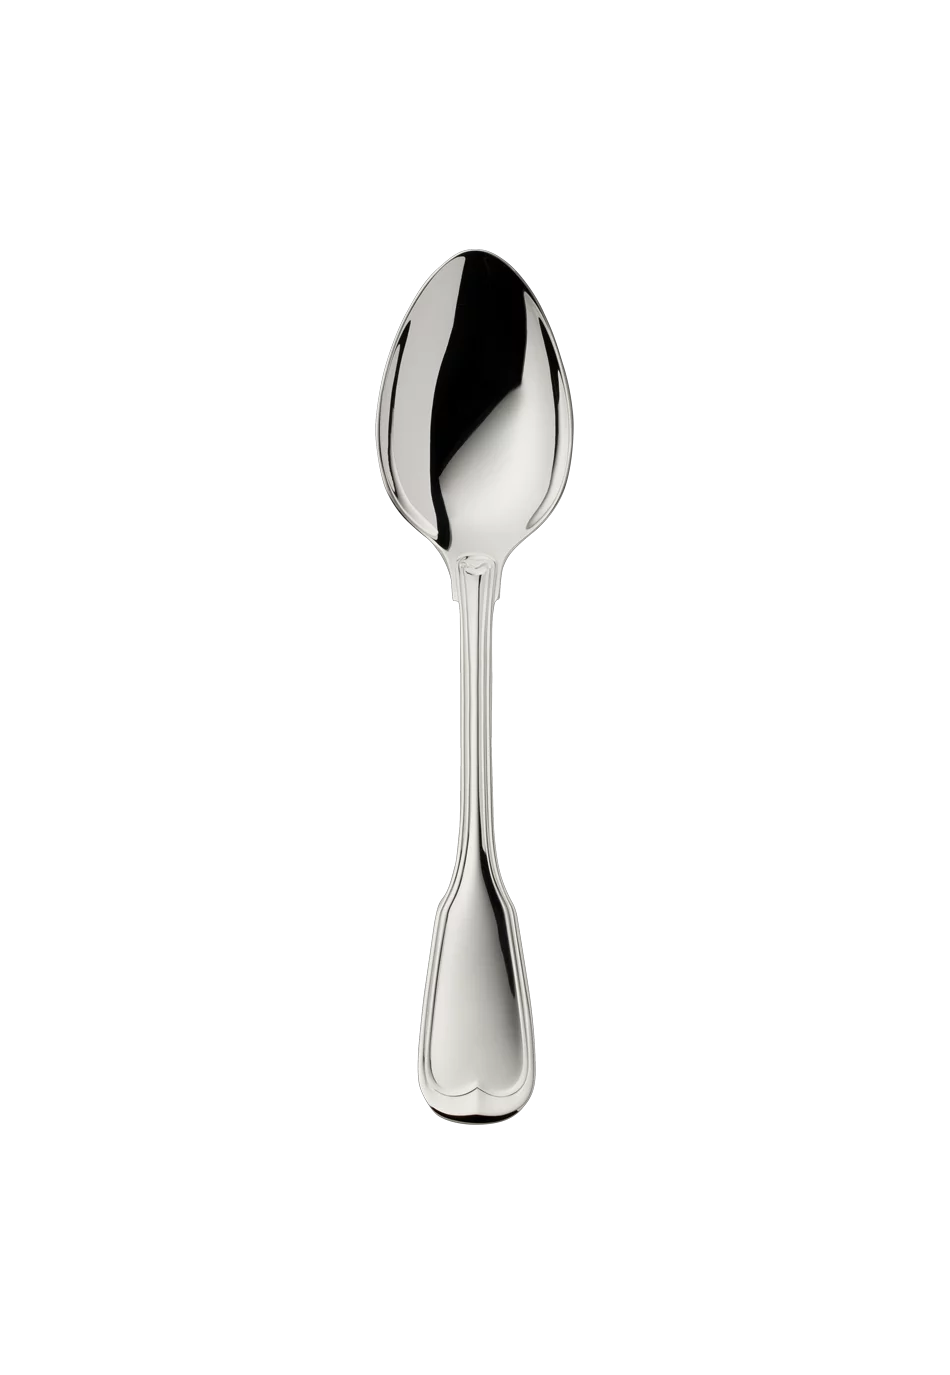 Alt-Faden Children's Spoon (150g massive silverplated)